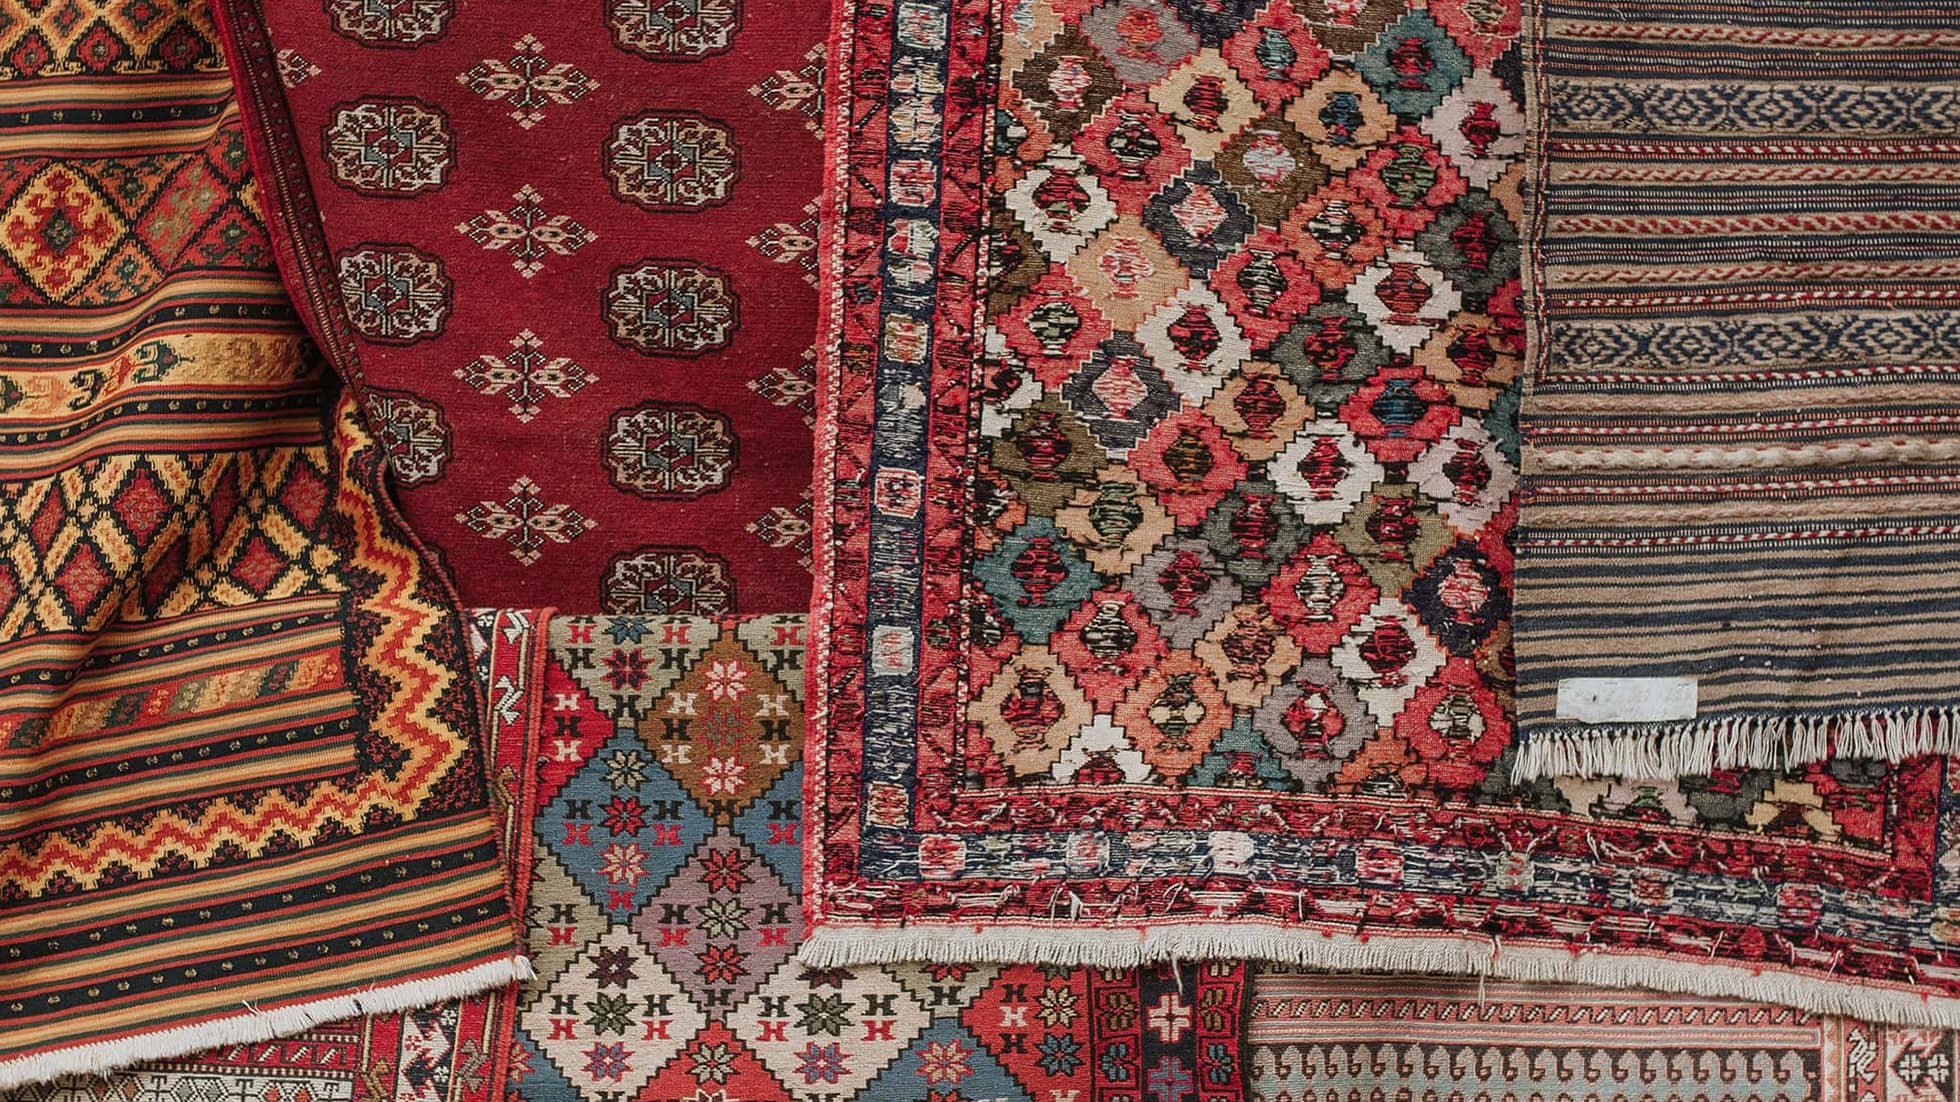 Handwoven Turkish kilim rug featuring traditional motifs